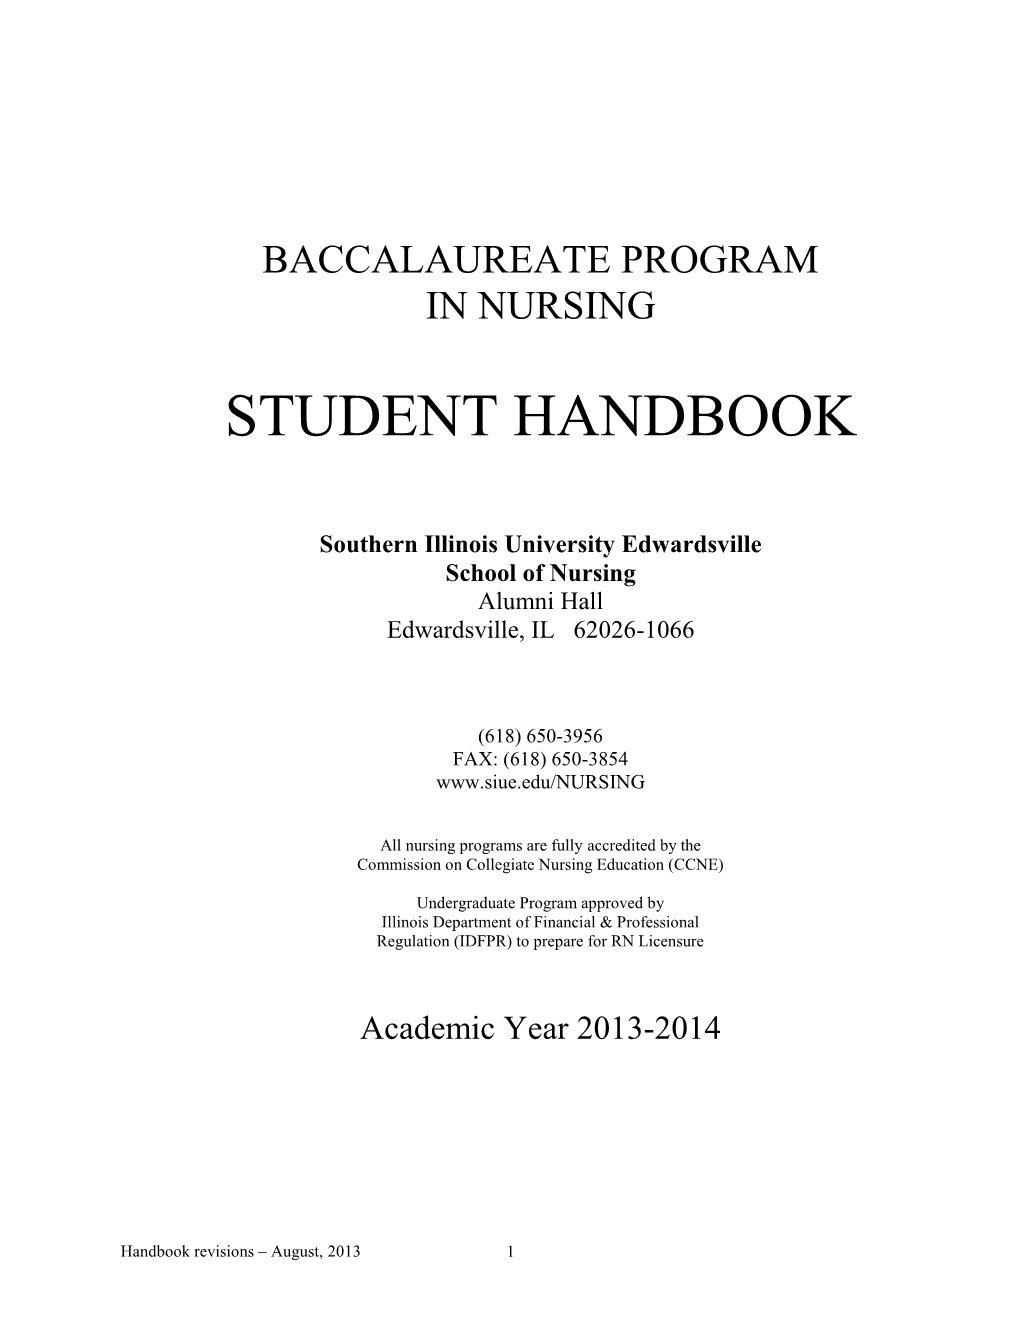 Baccalaureate Program in Nursing